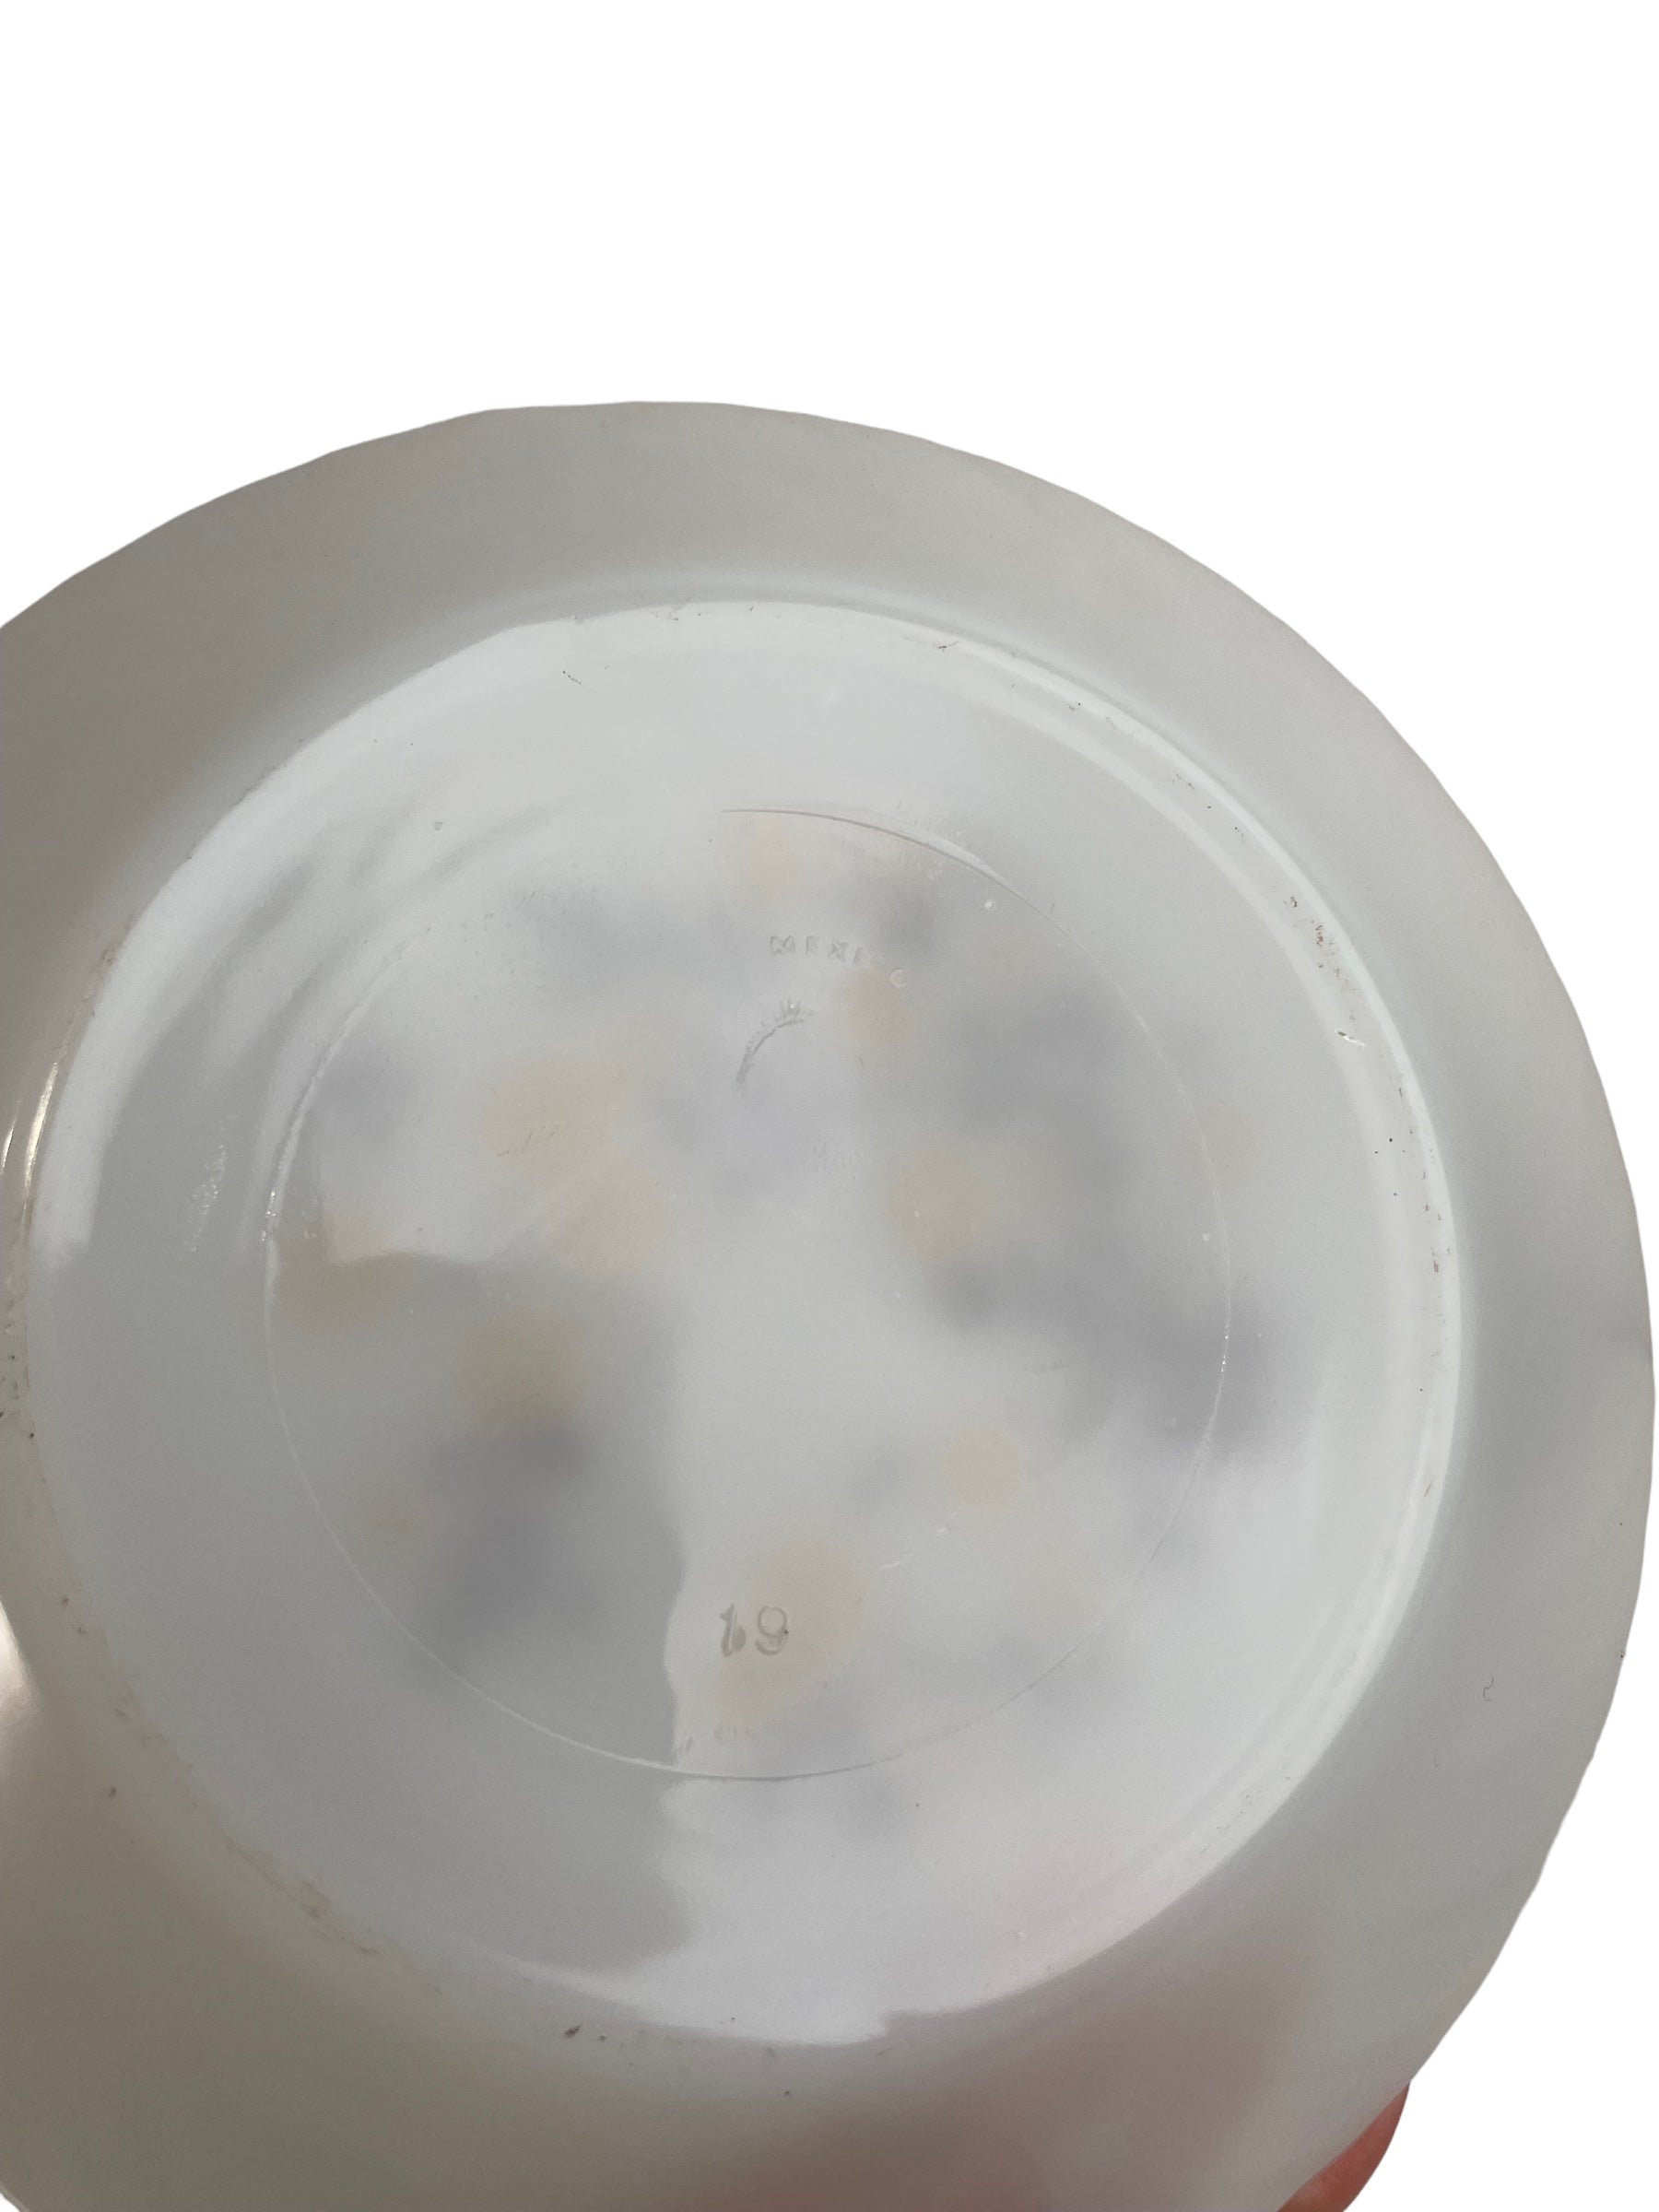 Set of 4 vintage 7.5-inch Termocrisa Milk Glass bowls